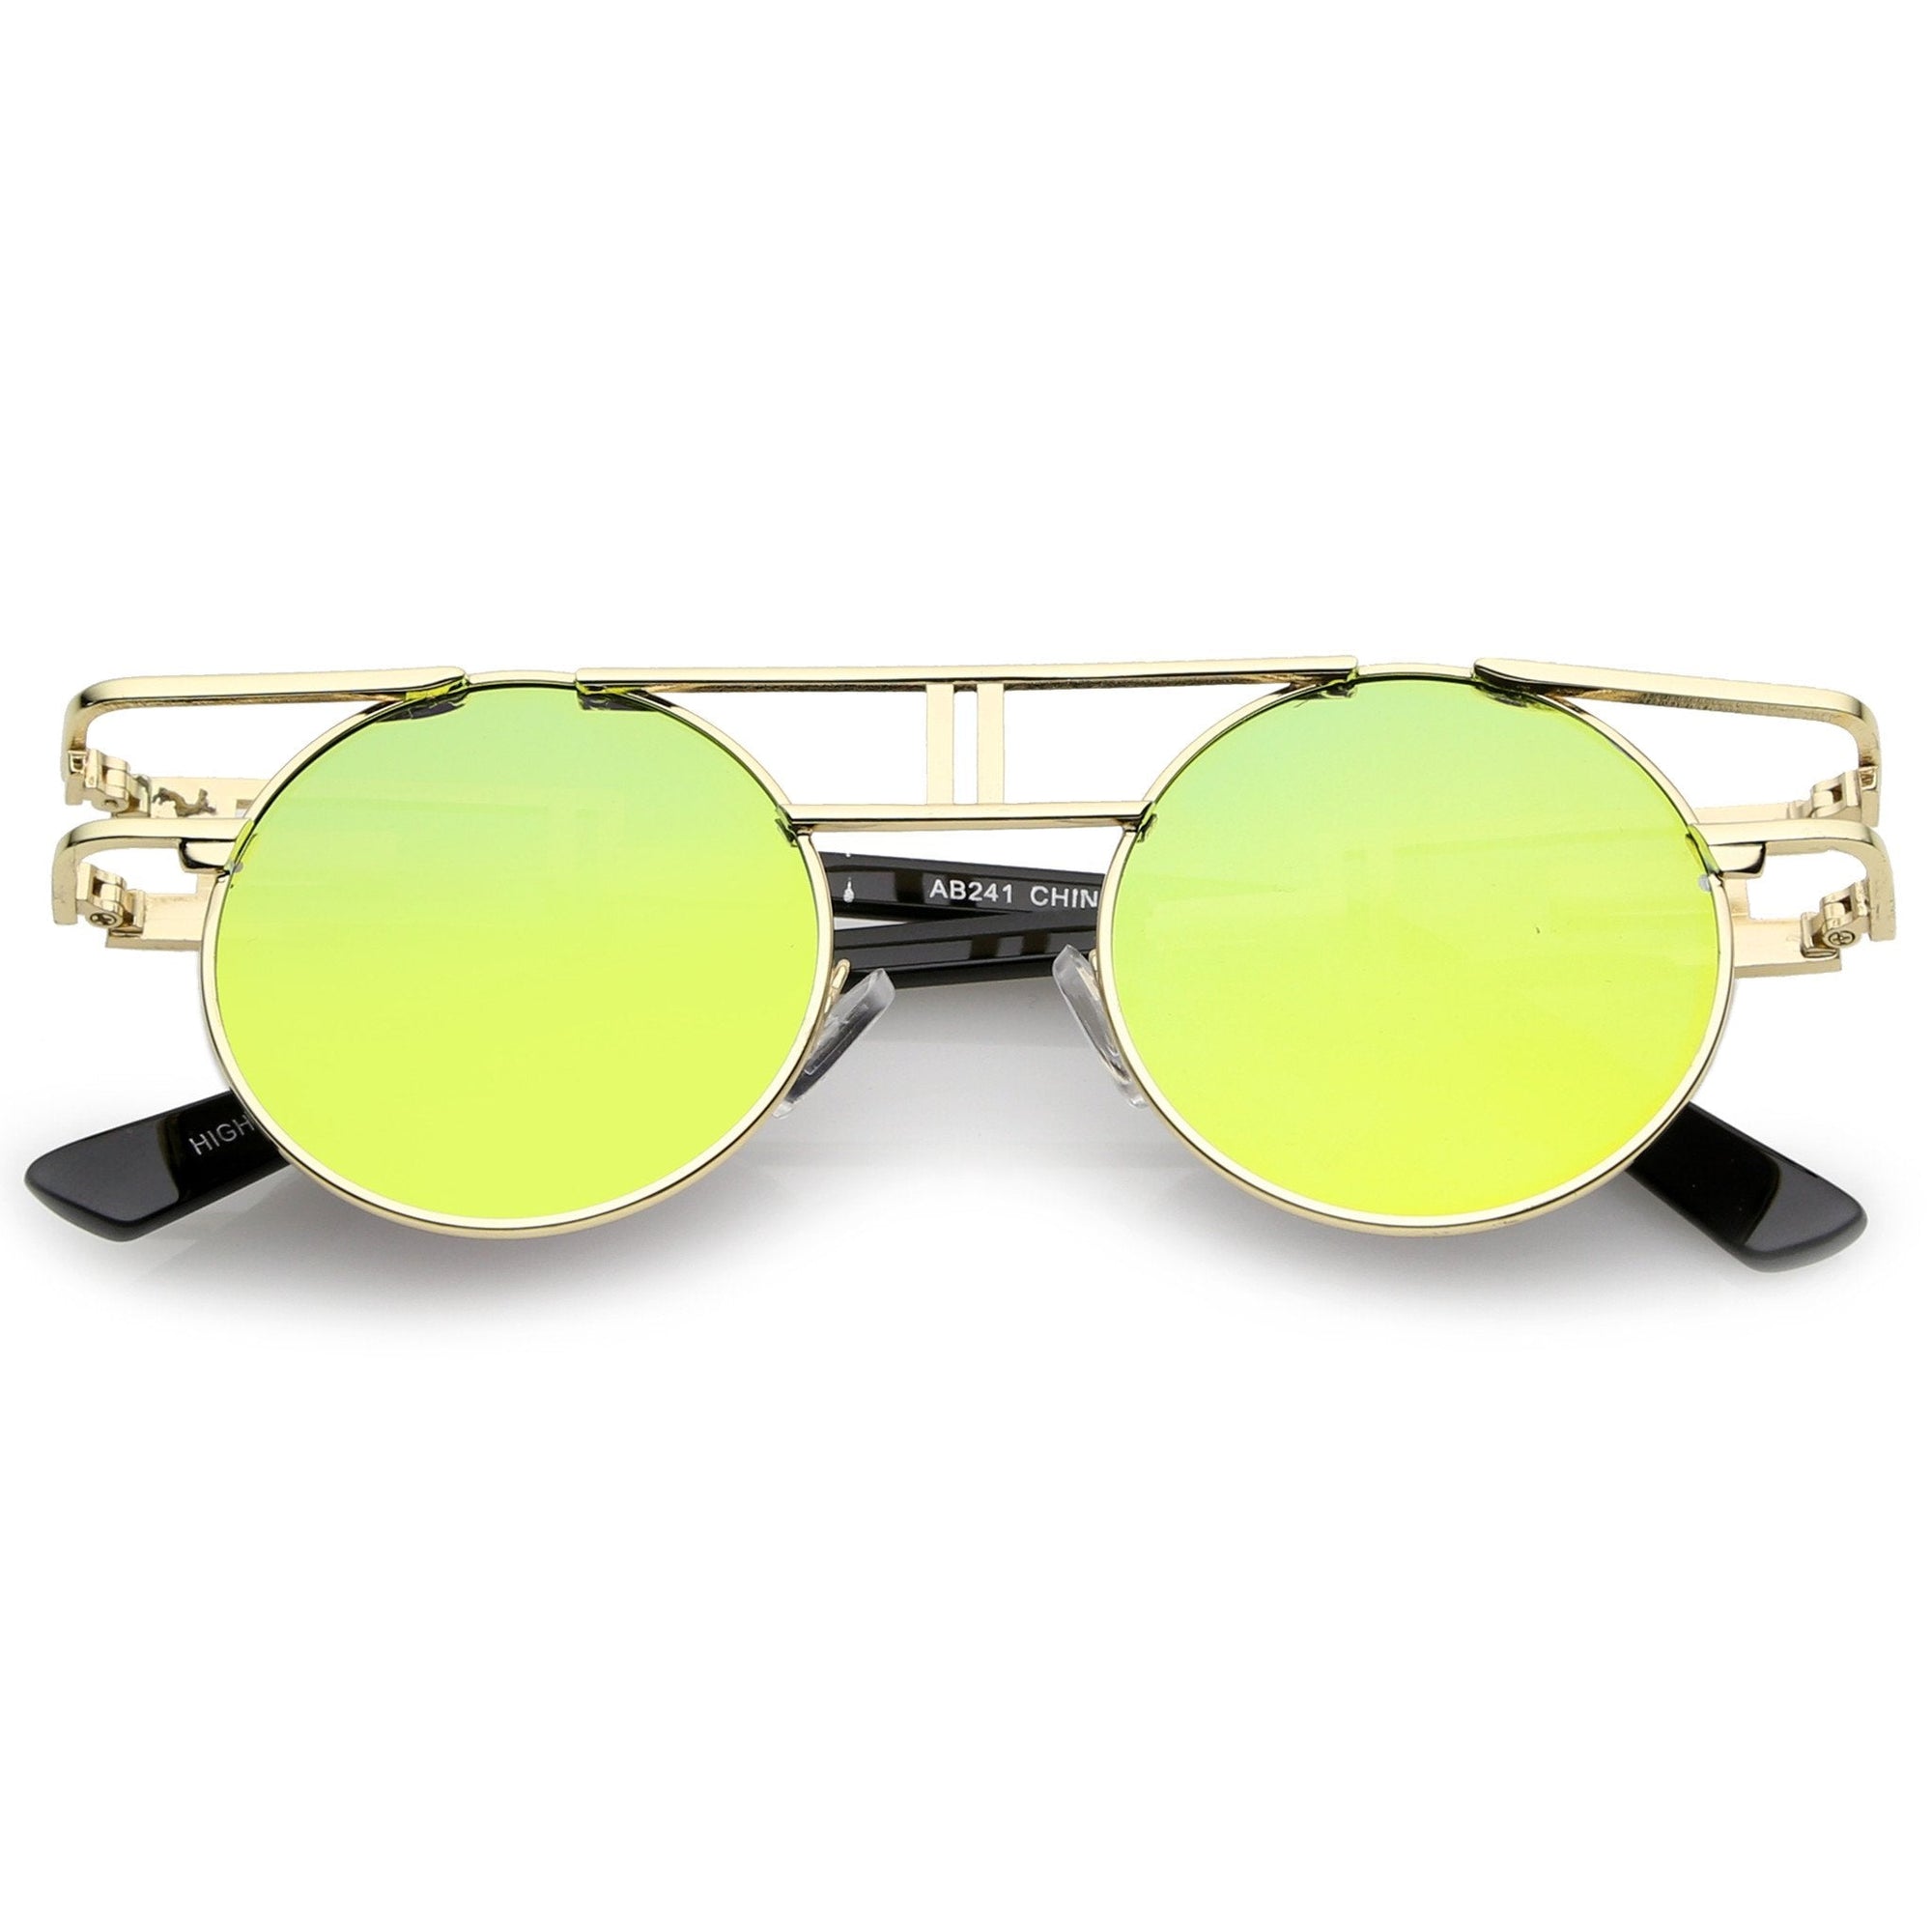 Gafas con lentes transparentes planas redondas y redondas con corte láser Steampunk C089